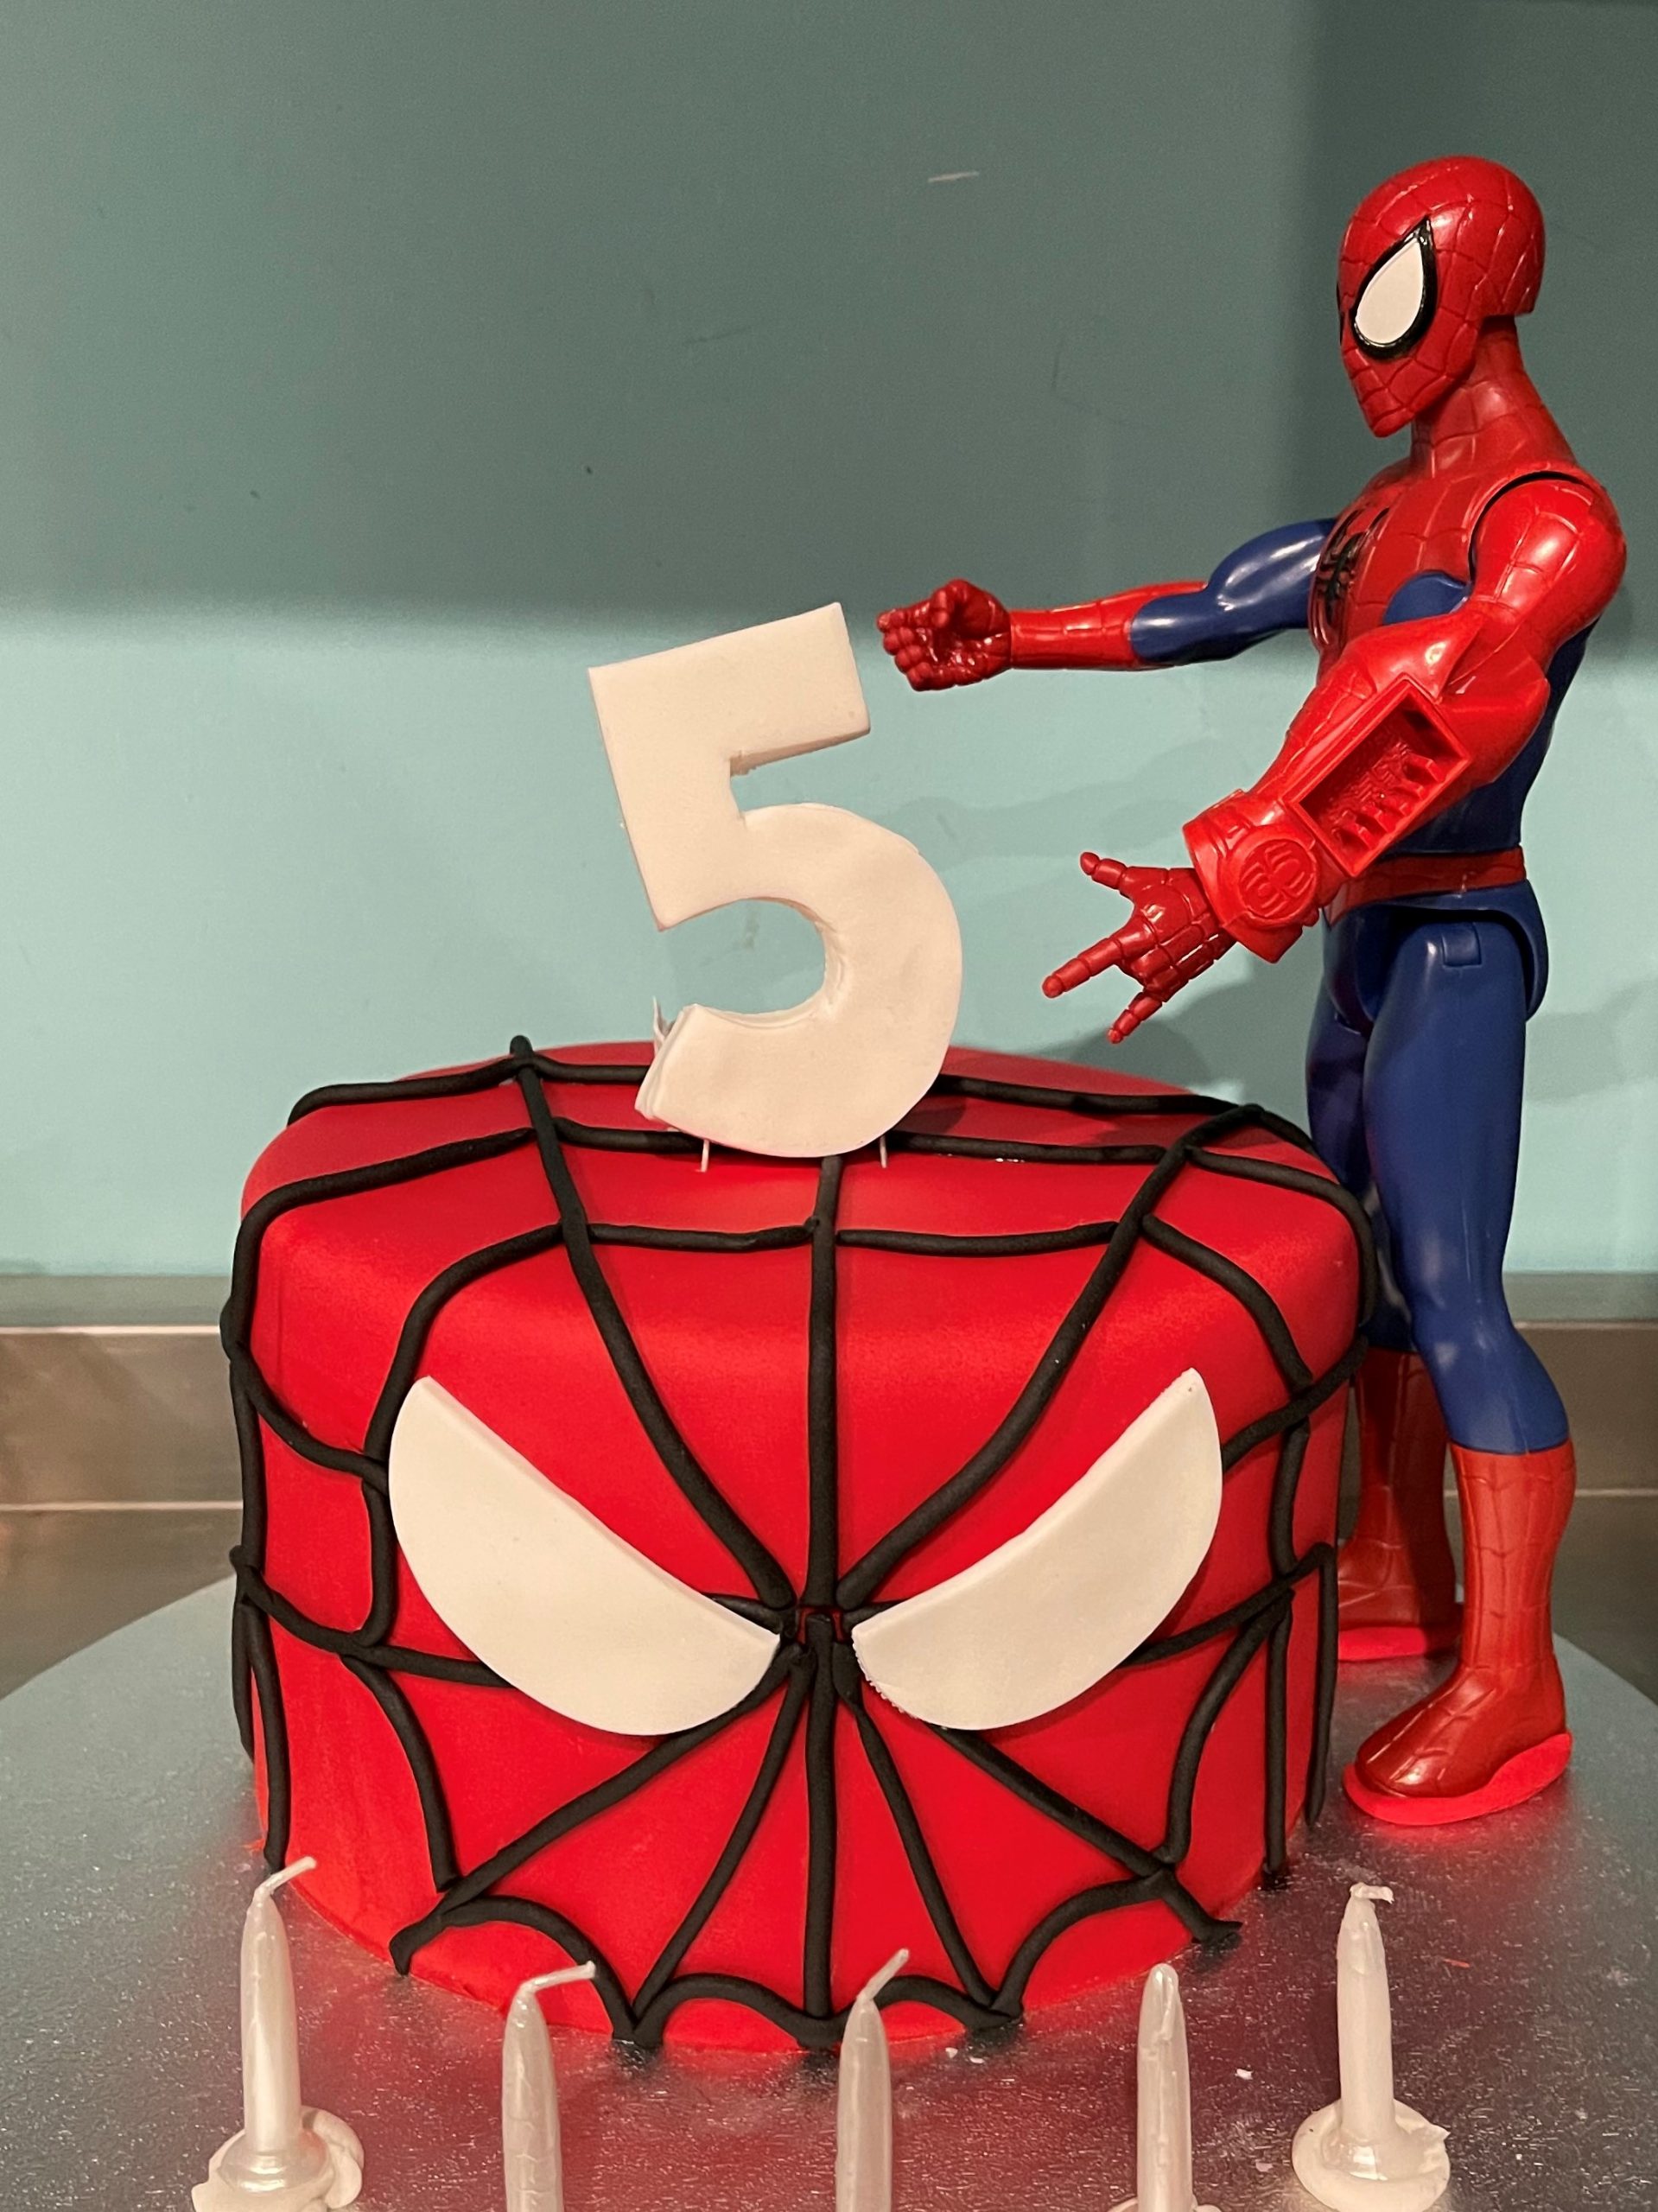 Spiderman Themed Birthday Cake - Wishque | Sri Lanka's Premium Online Shop!  Send Gifts to Sri Lanka